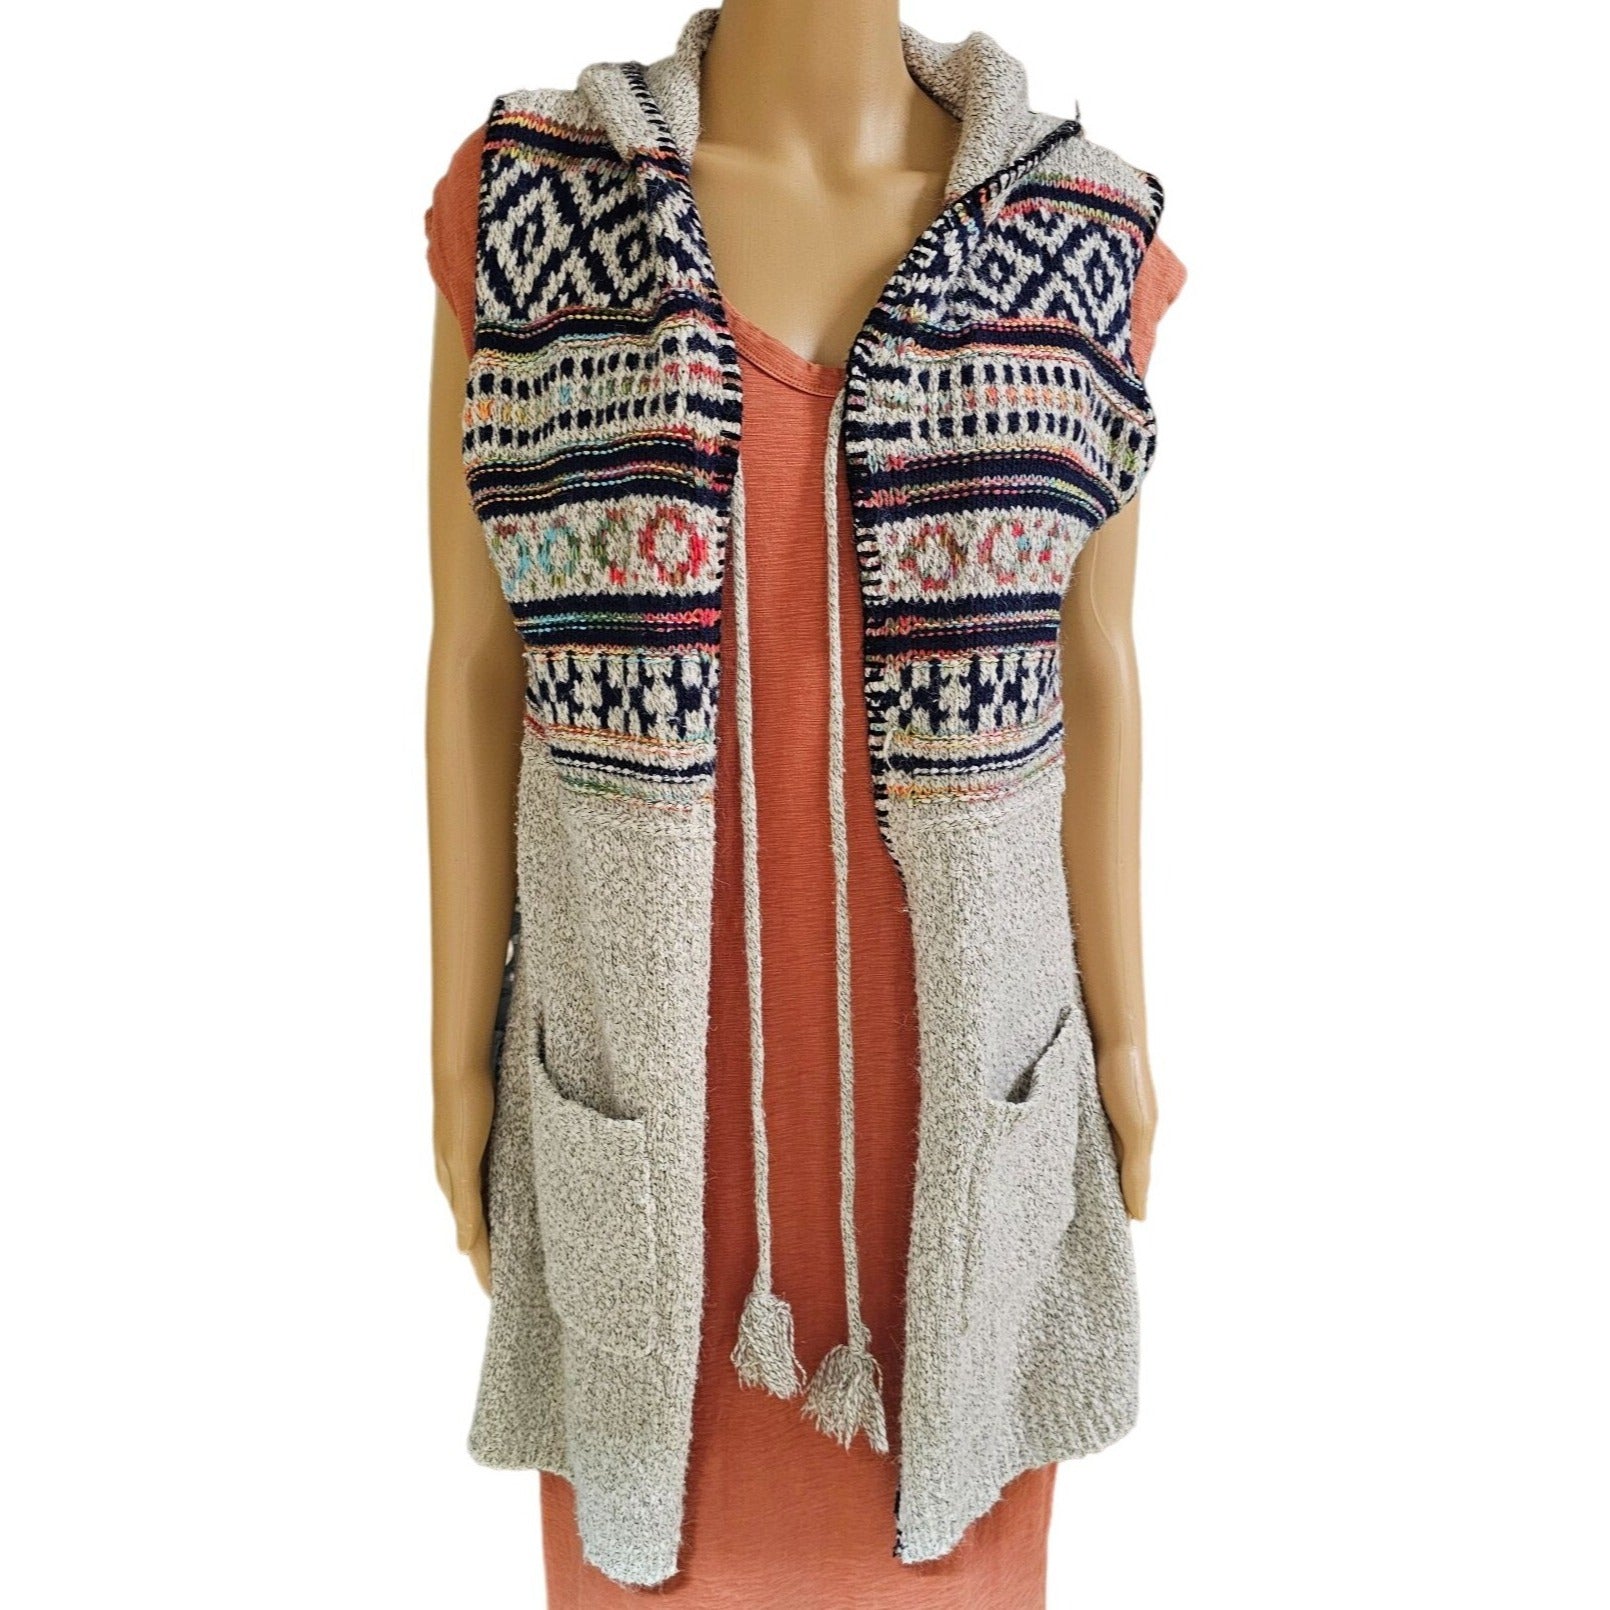 Jodifl Sleeveless Western Aztec Pattern Sweater Cardigan with Hood, Size Medium